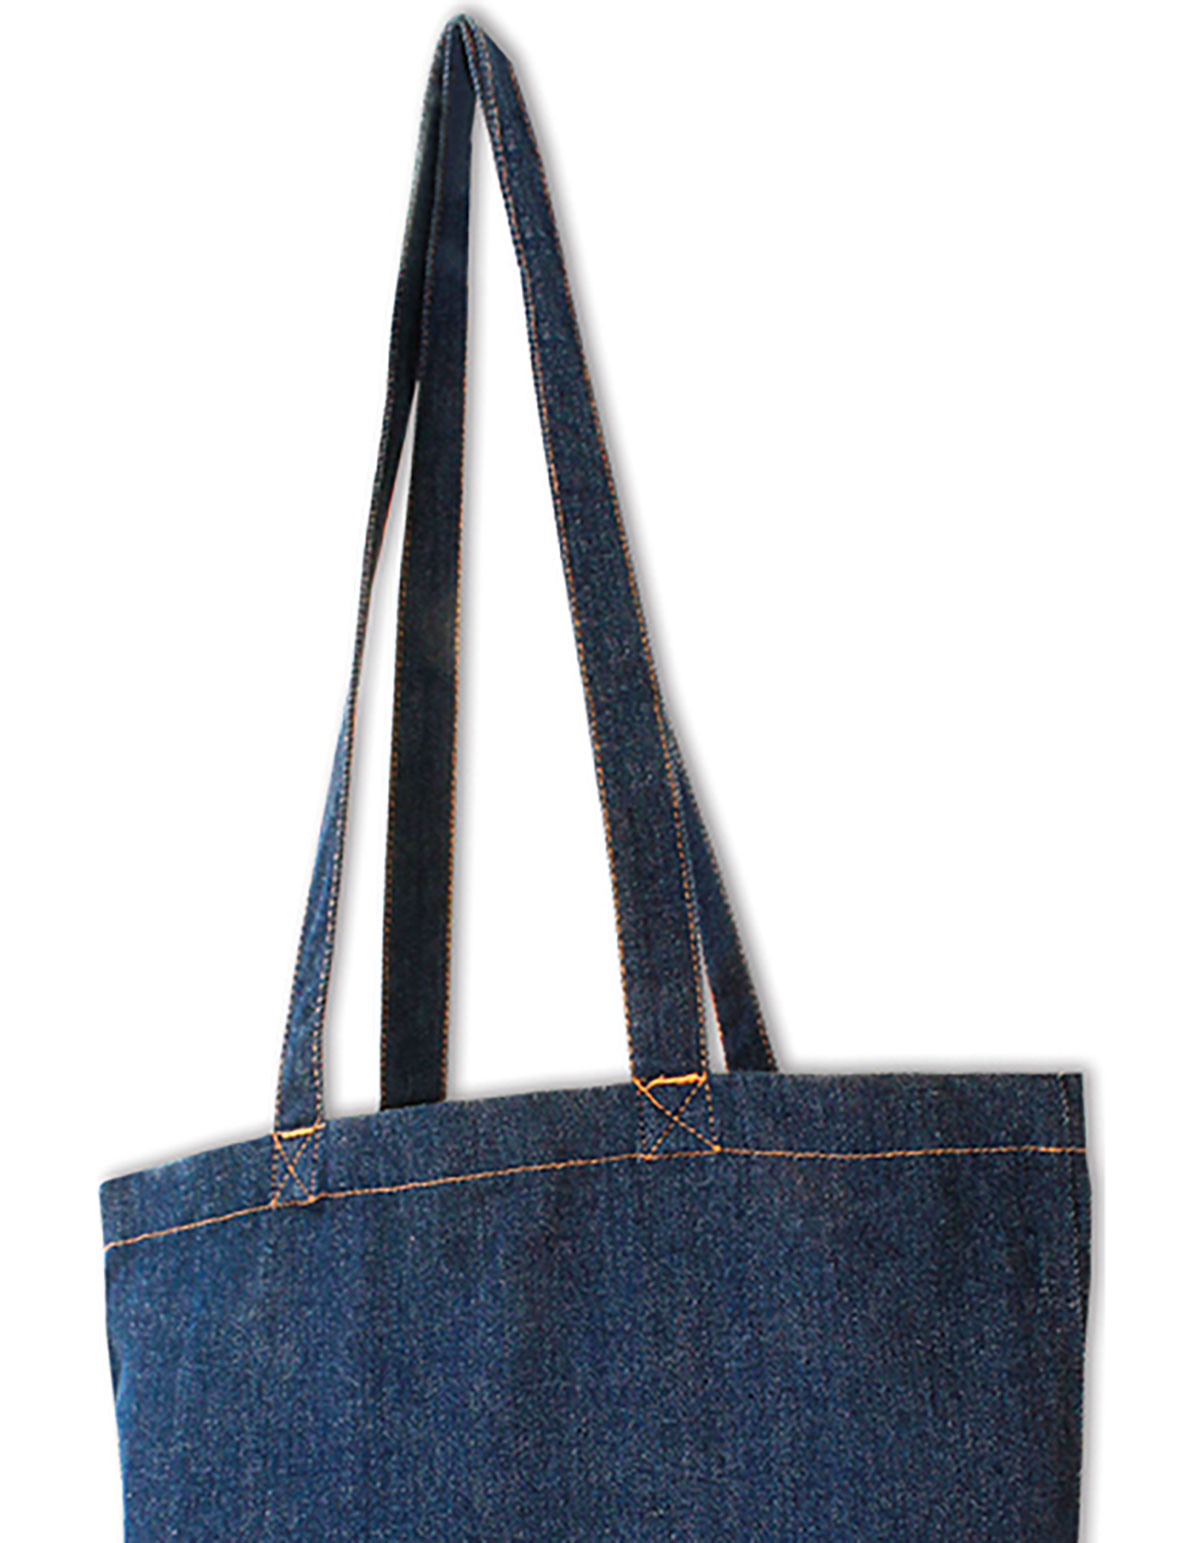 Jeans Bag - Long Handles Link Kitchen Wear X963